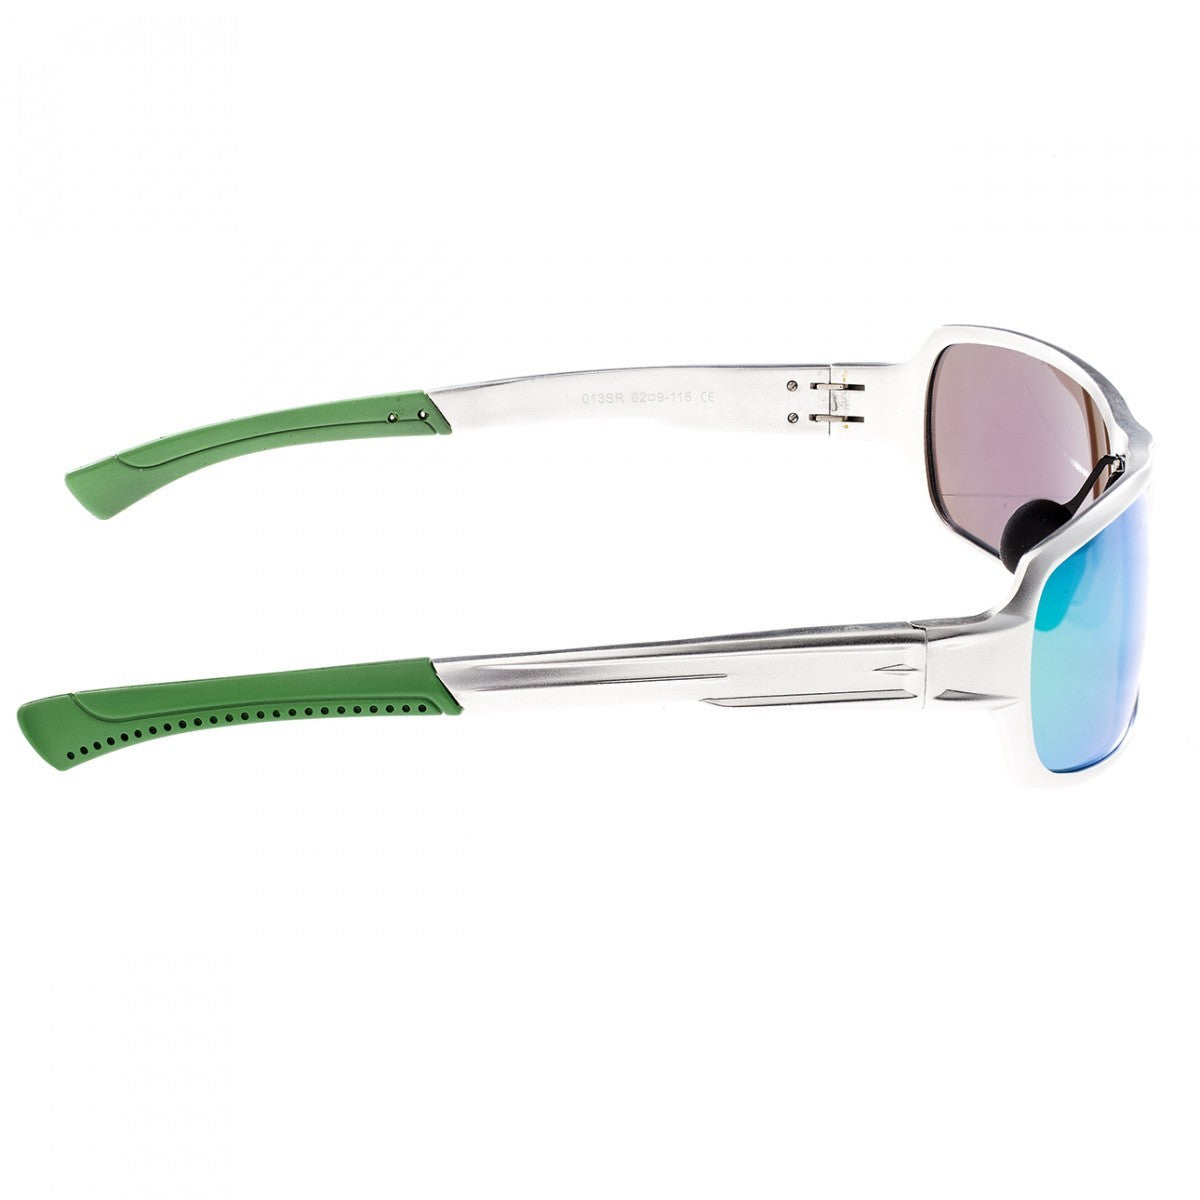 Breed Cosmos Aluminium Polarized Sunglasses - Silver/Blue-Green - BSG013SR